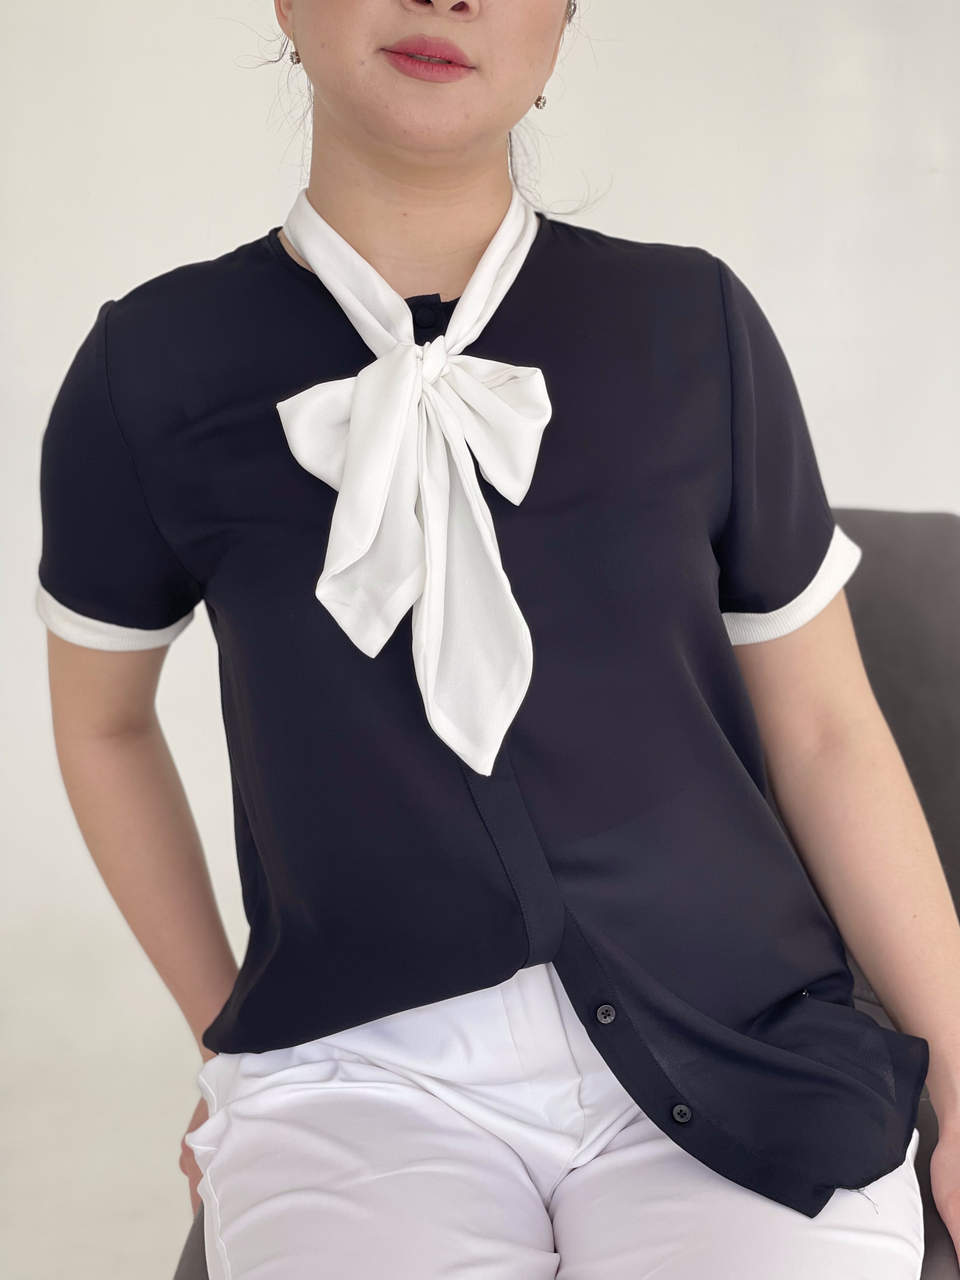 Женская блузка So French. Франция. Цвет: черный/белый. Размер EUR 36-42 - фото 2